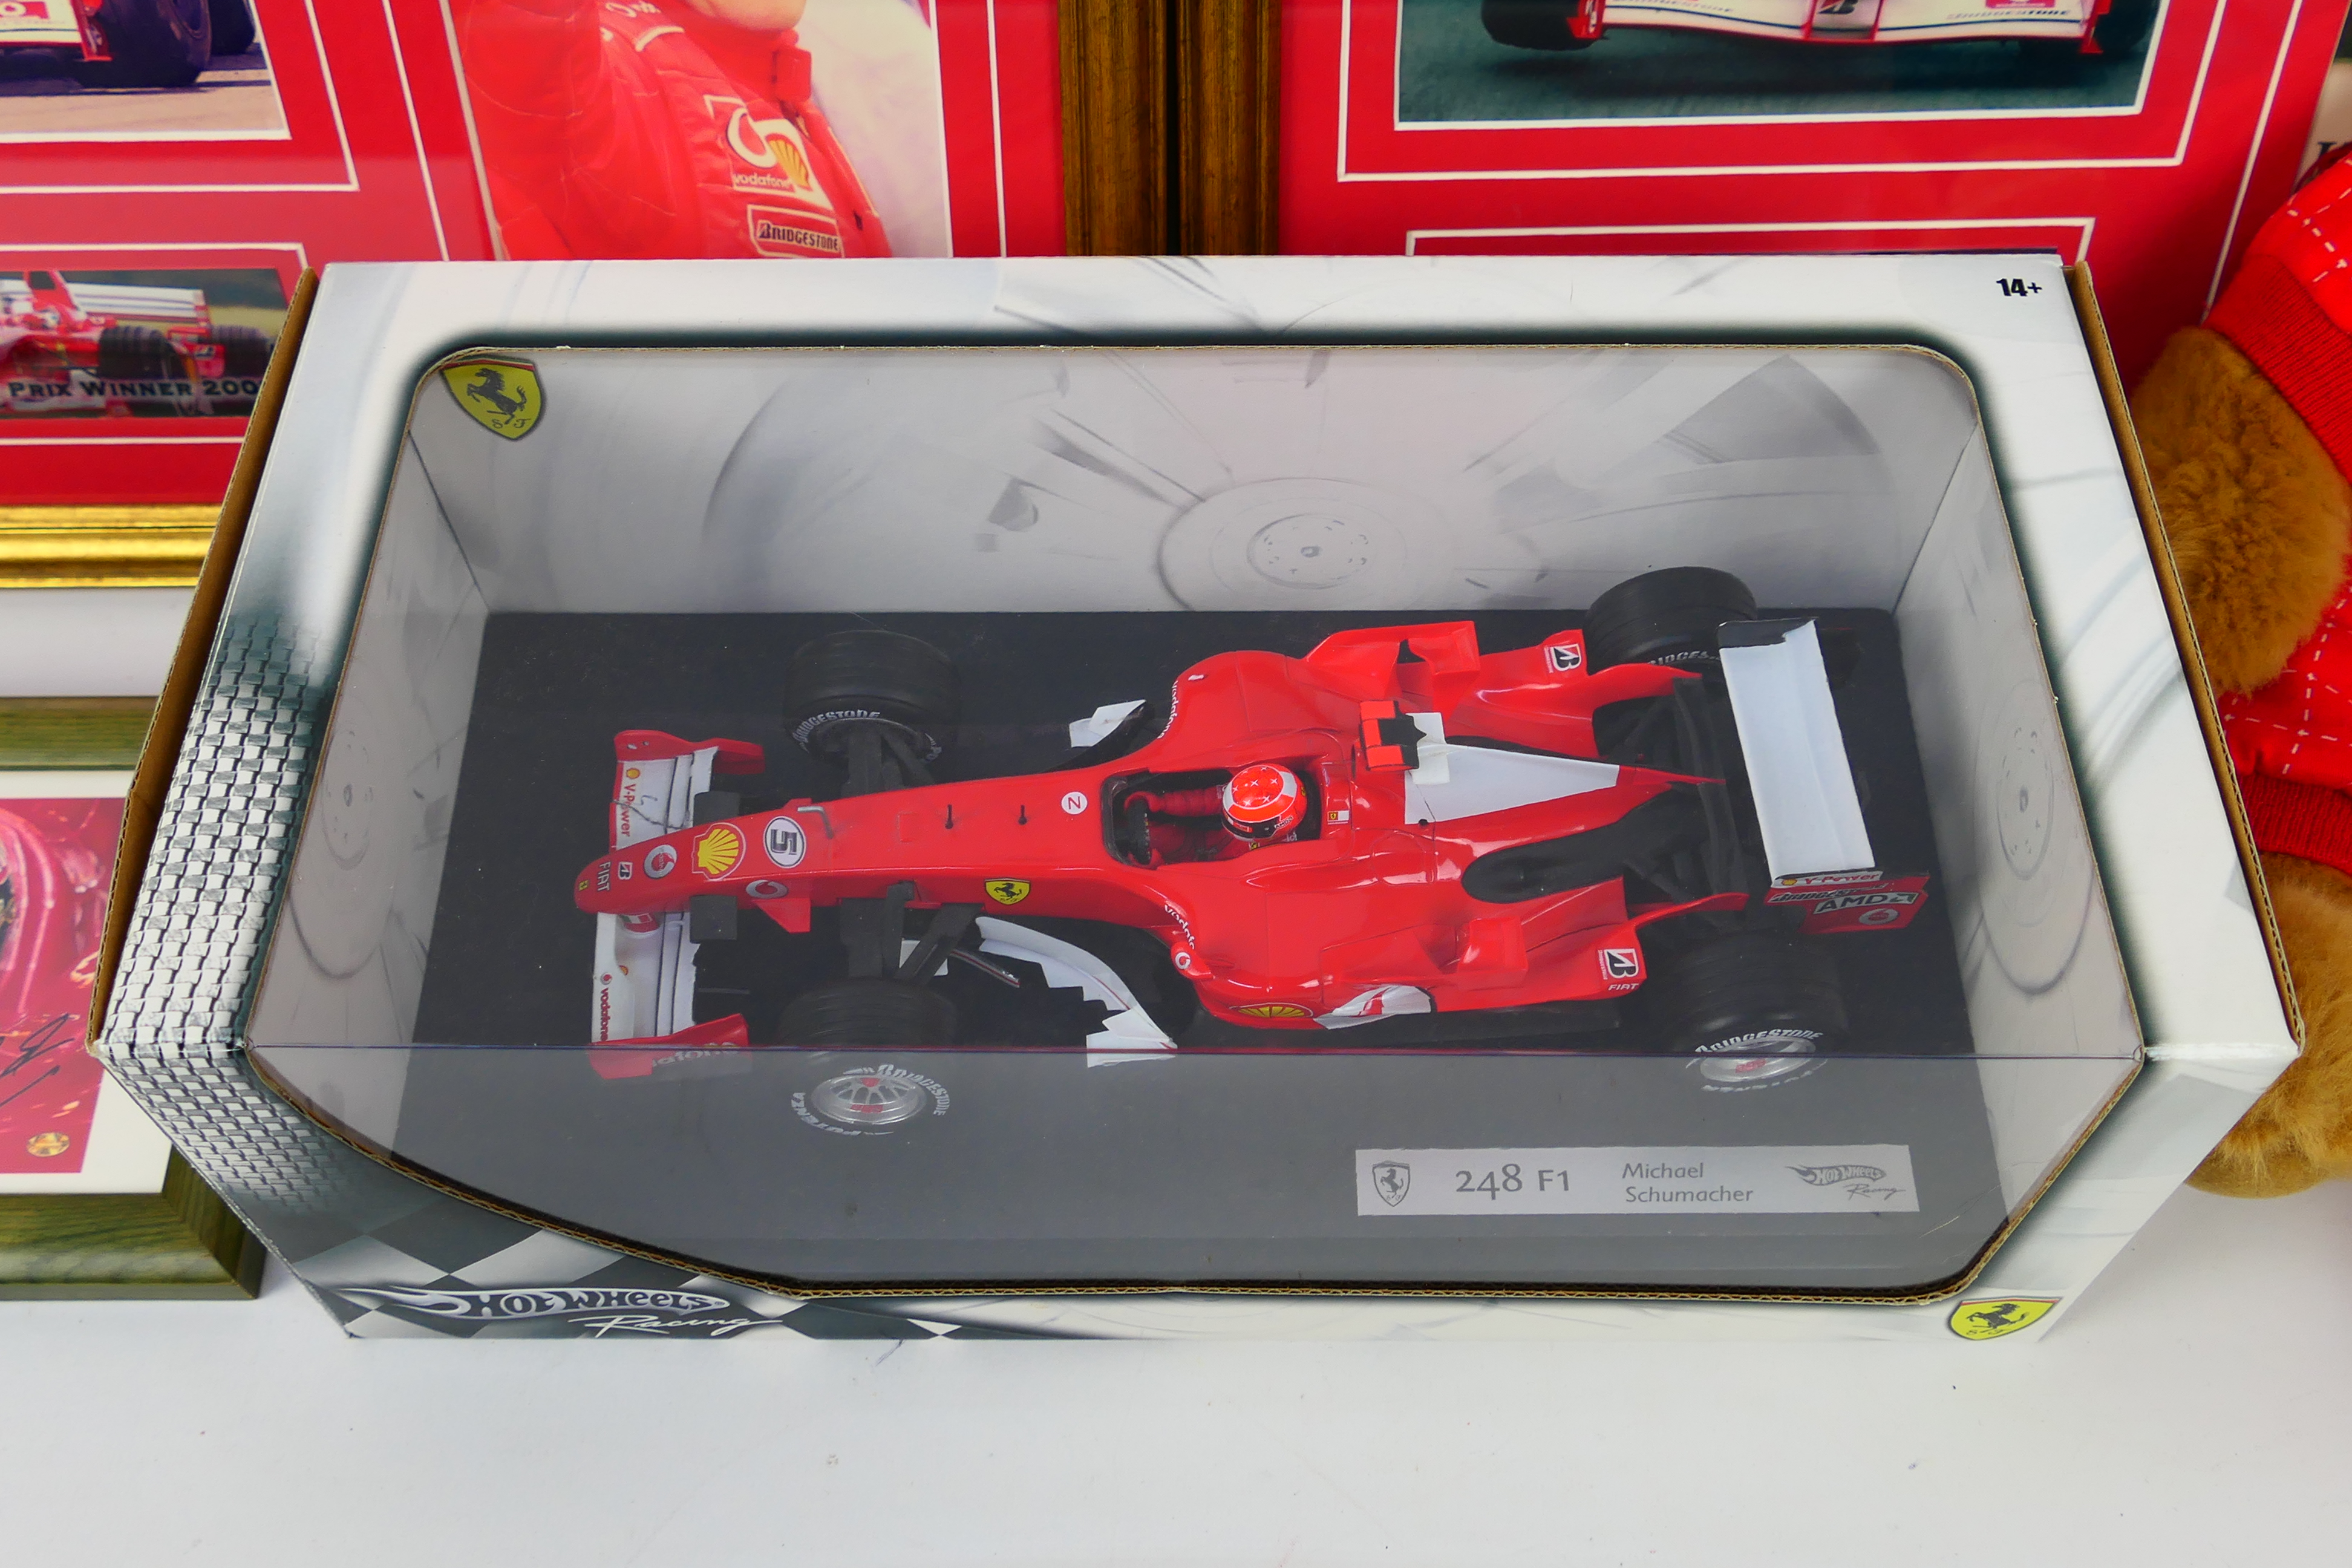 Hot Wheels - A boxed 1:18 scale Hot Wheels 'Racing' J2980 Ferrari 248 F1 diecast racing car. - Image 3 of 7